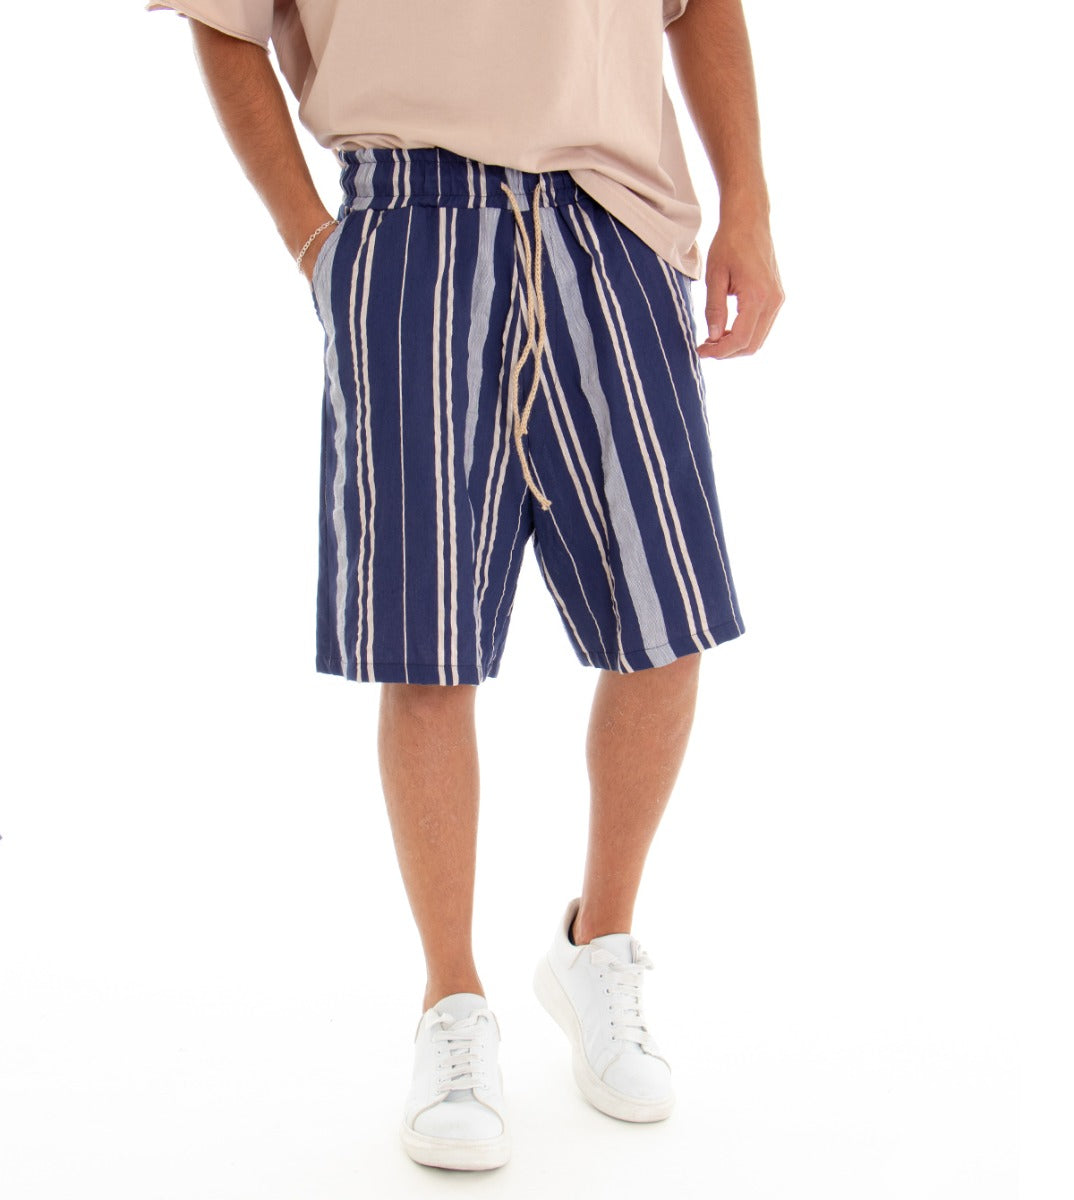 Bermuda Shorts Men's Shorts Striped Blue Elastic GIOSAL-PC1544A